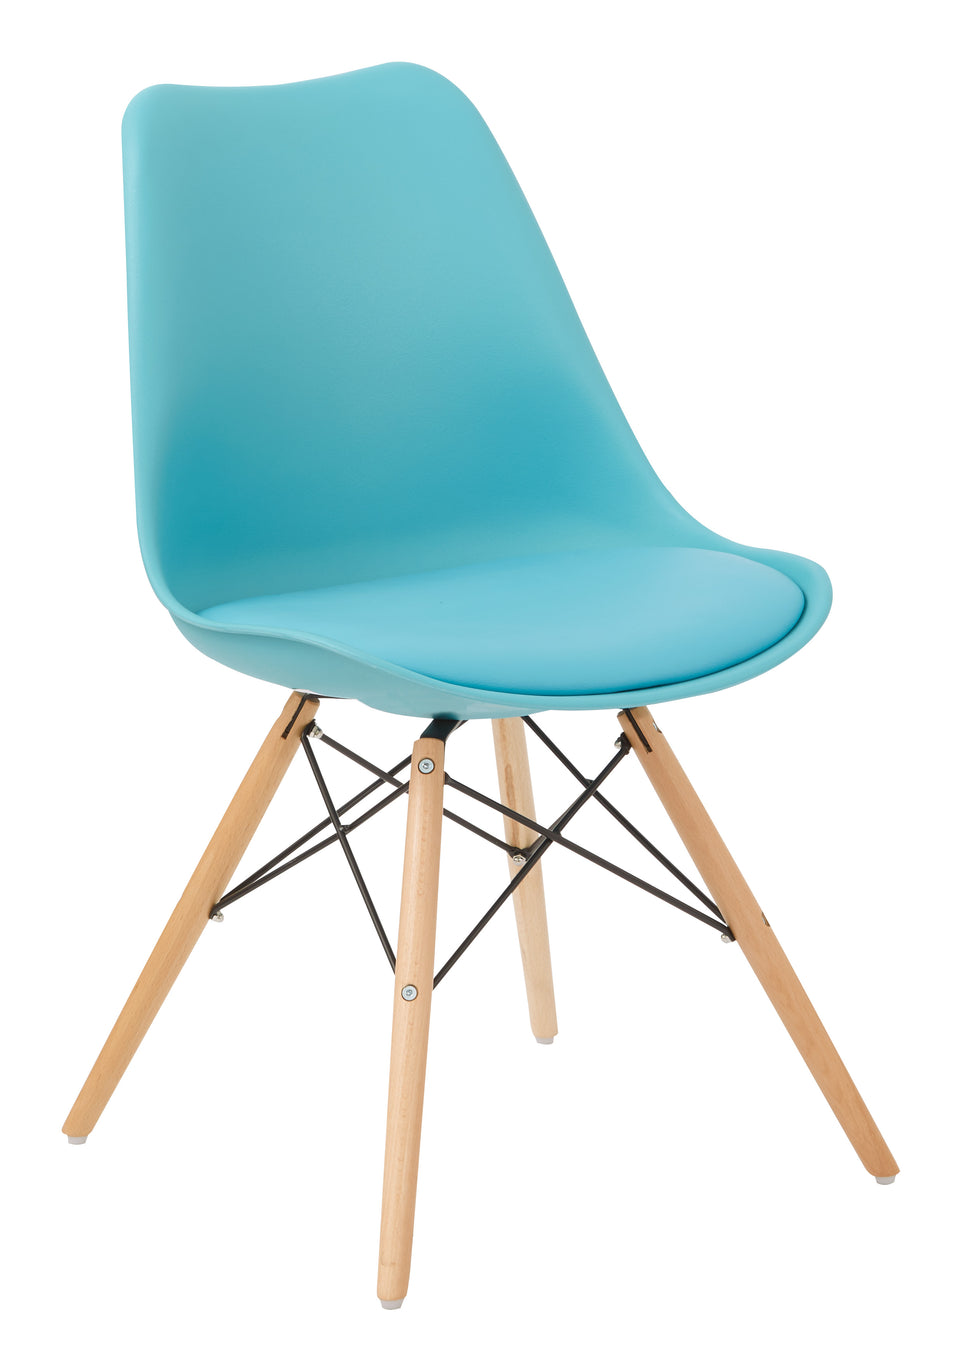 mid century modern aimes blue bucket chair with natural post legs scandinavian design inspired from decurban.com